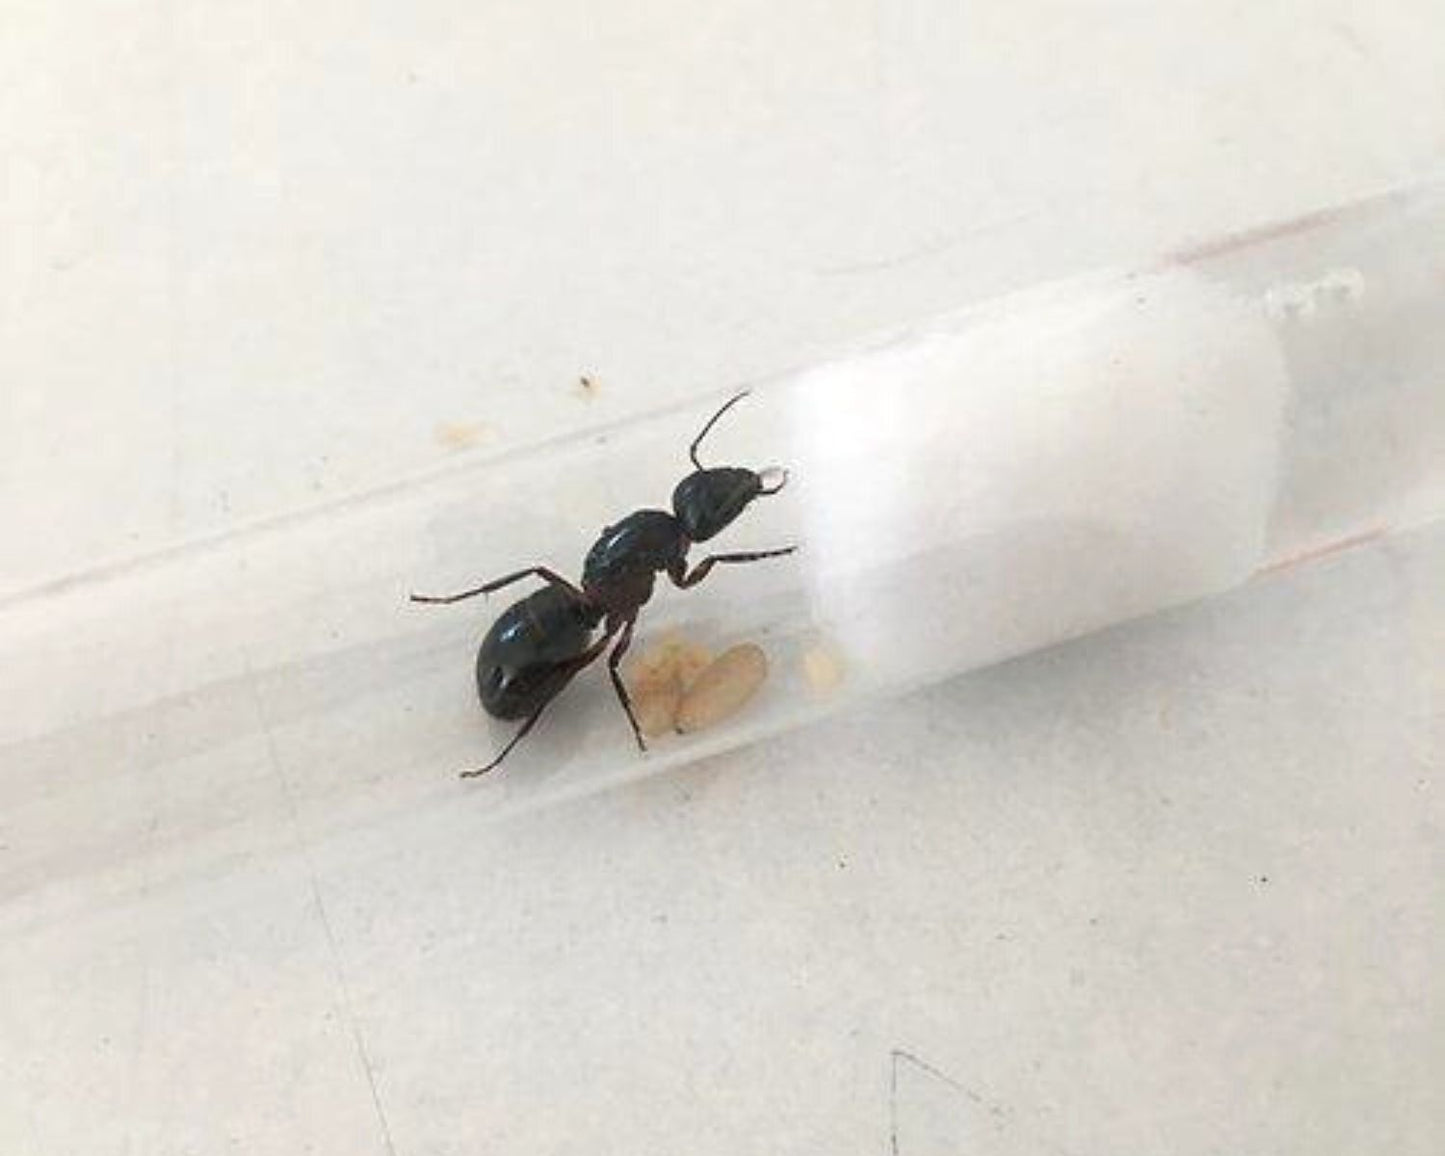 Hormigas - Camponotus herculeanus